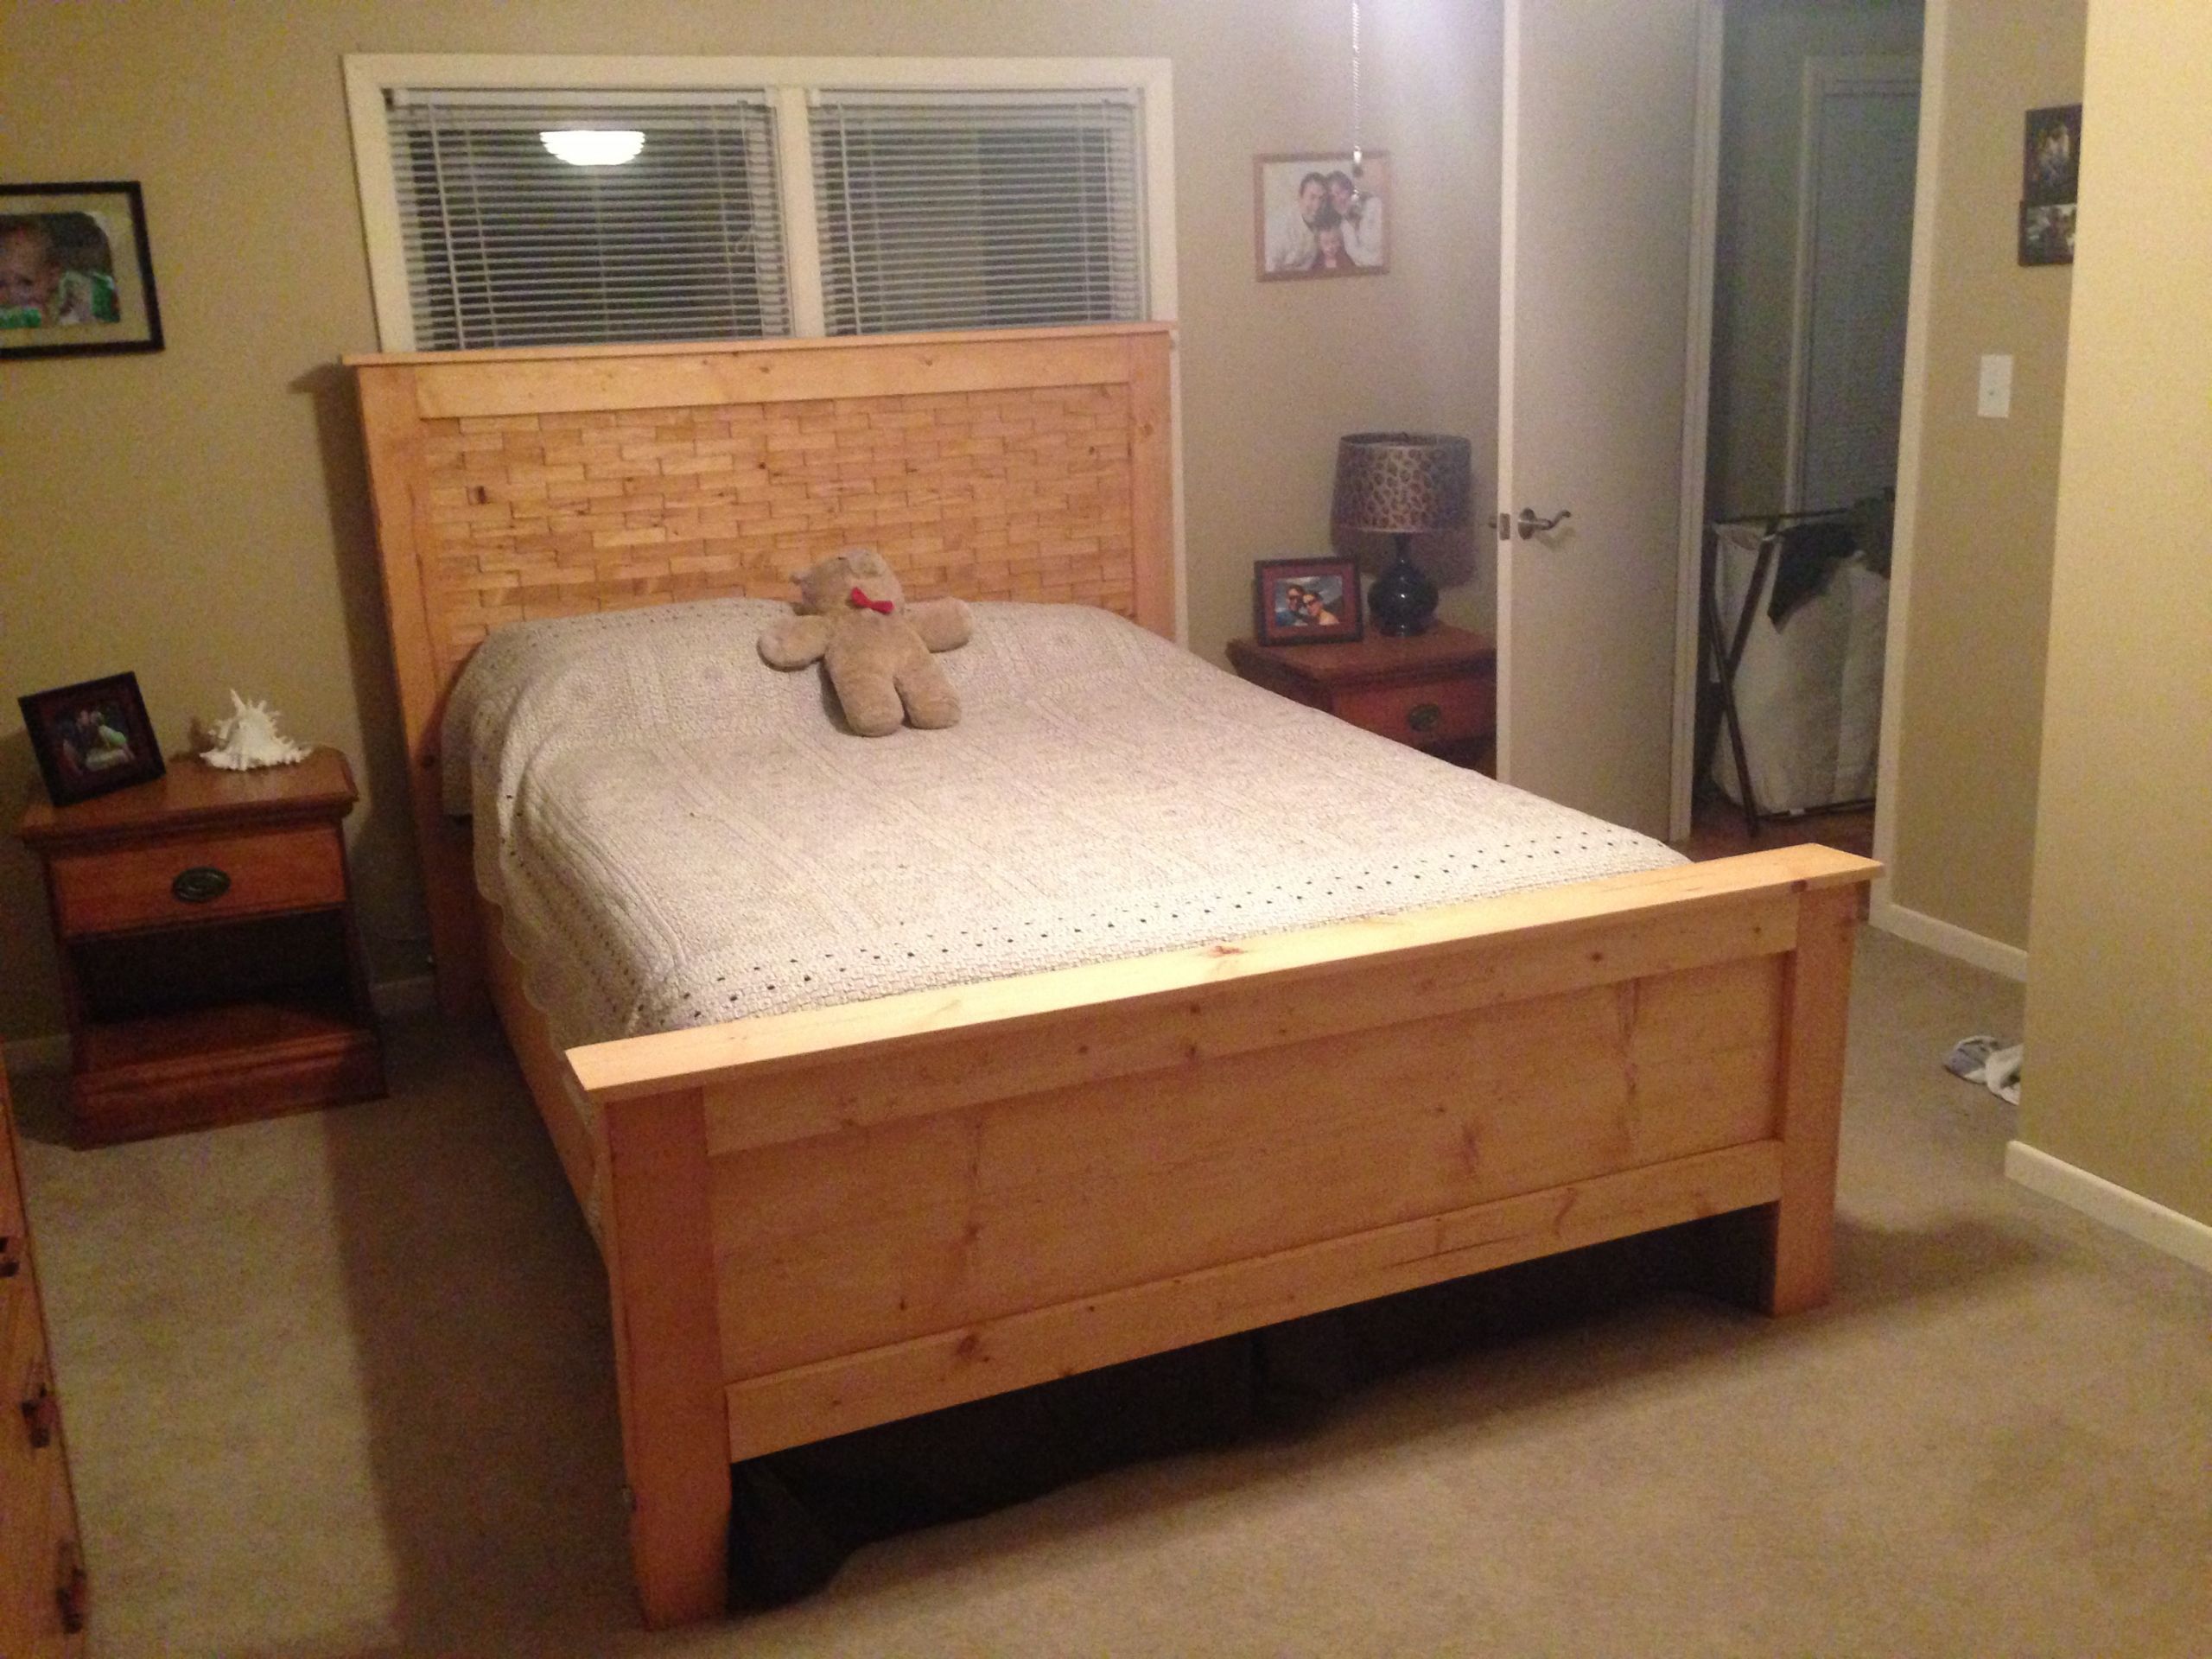 DIY Wooden Bed Frame With Storage
 Bedroom Wooden Homemade Bed Frame For Your Bedroom